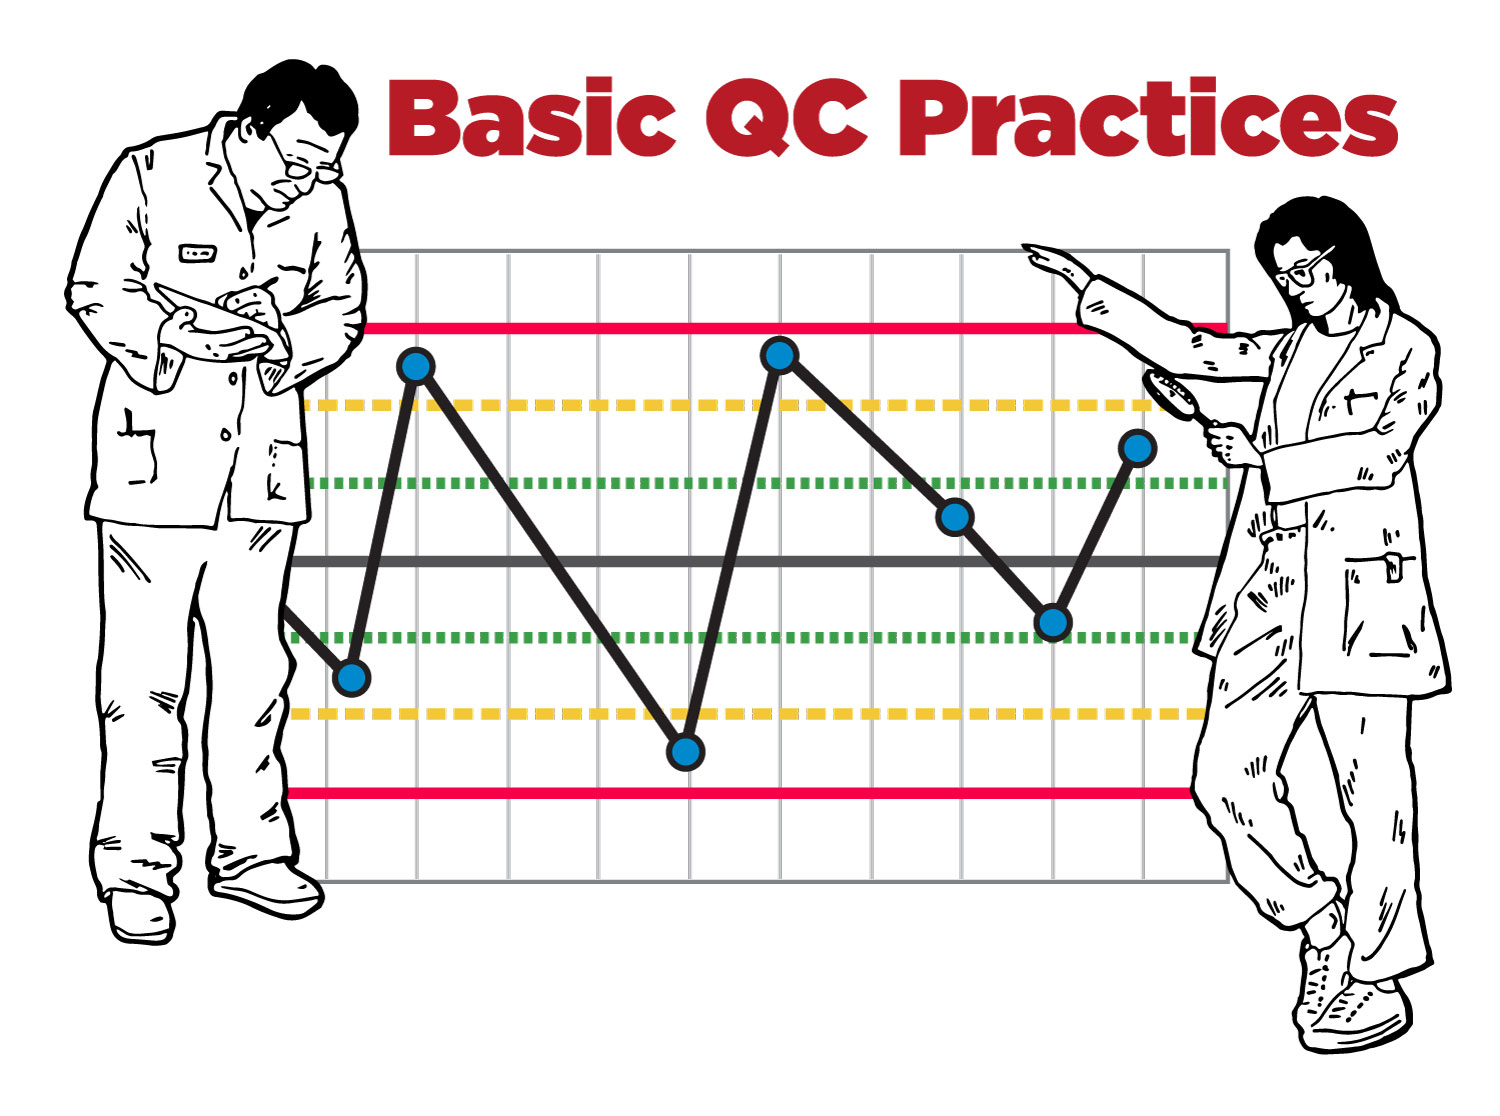 Basic QC Practices